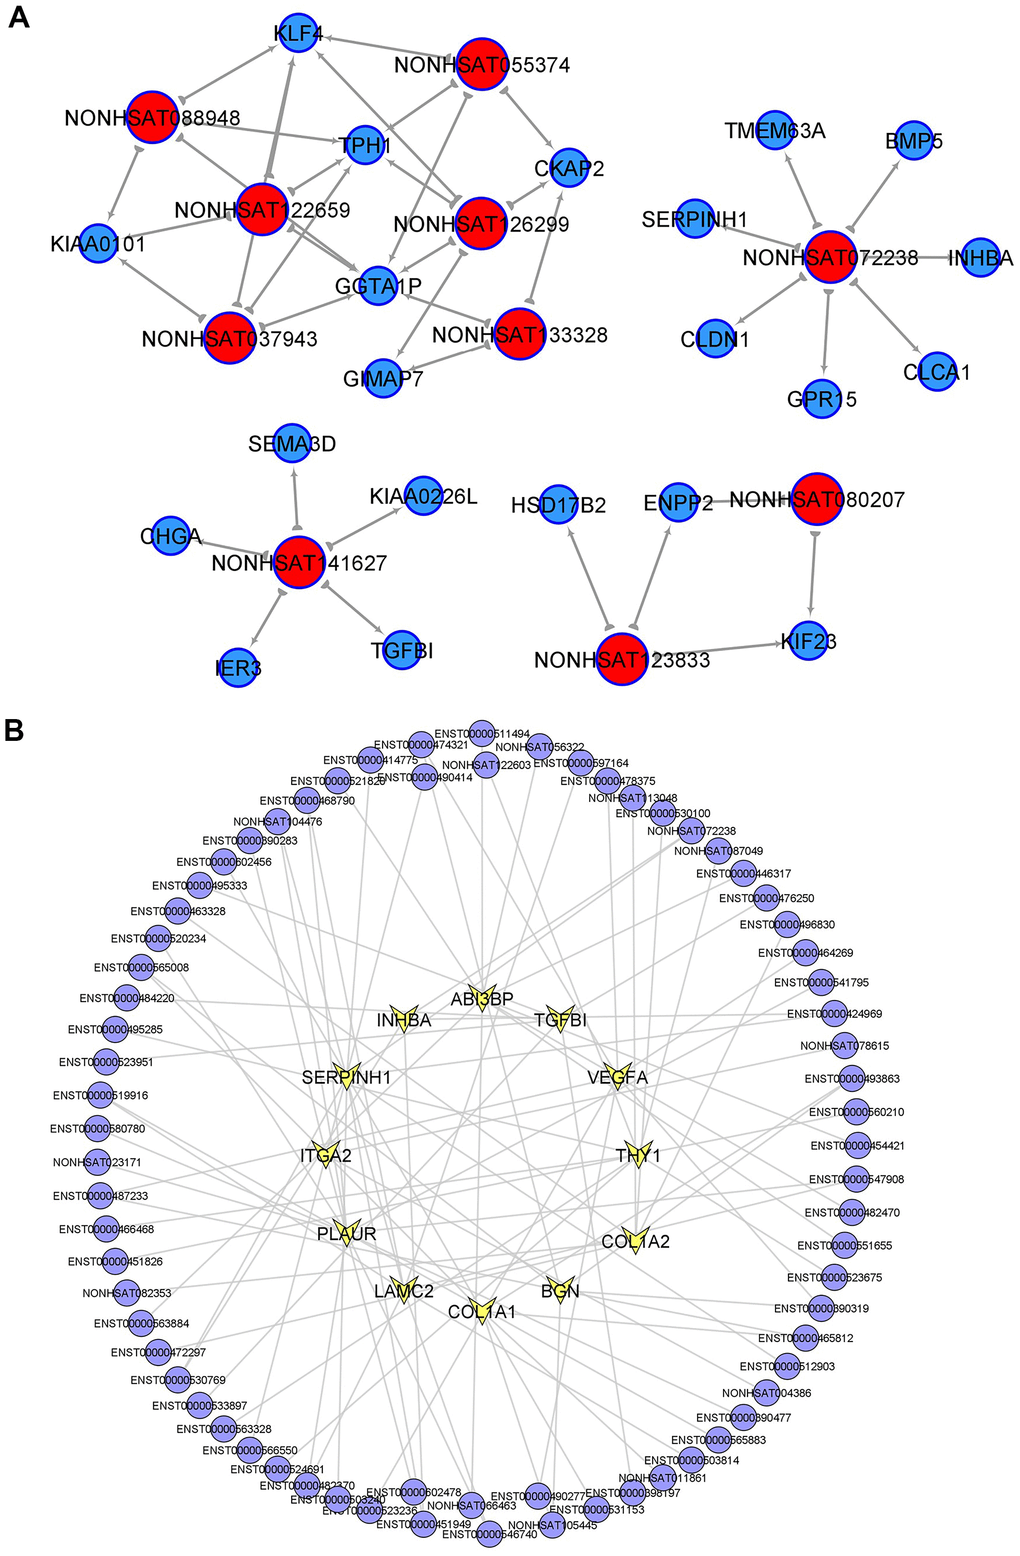 Key lncRNAs in CRC tumorigenesis and EMT-related lncRNAs. (A) lncRNA-mRNA network in CRC tumorigenesis. Top10 selected lncRNAs and 21 mRNAs were included in this network. (B) PT related lncRNAs involved in EMT (epithelial mesenchymal transition) signaling pathway.